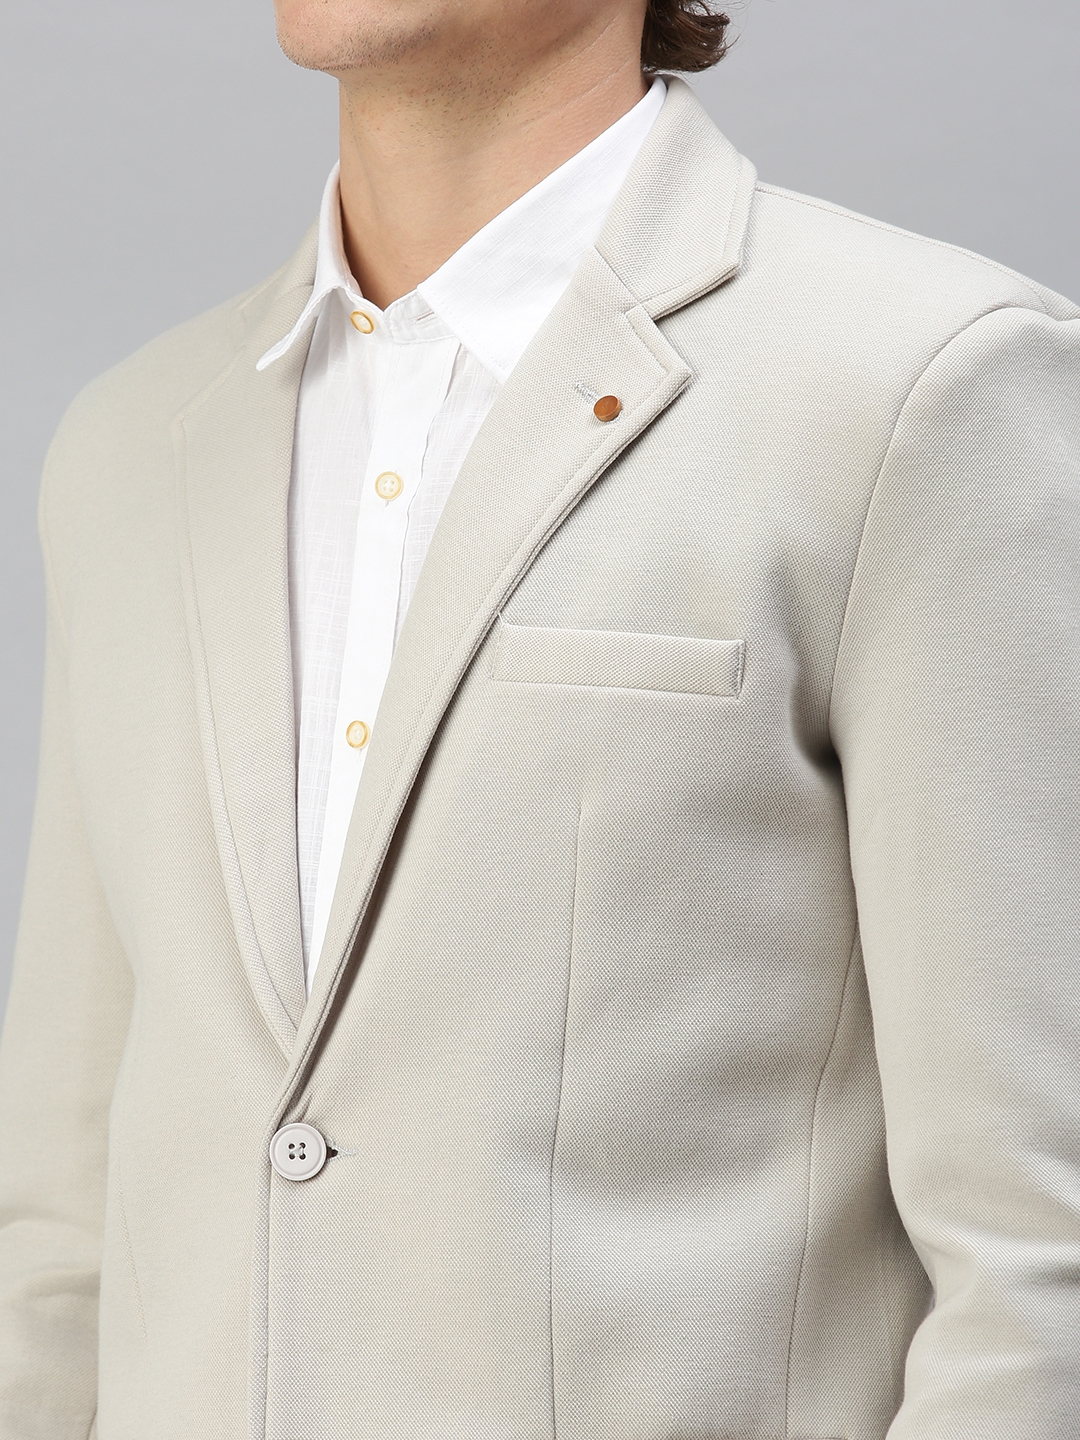 Men's Grey Cotton Blend Solid Blazers